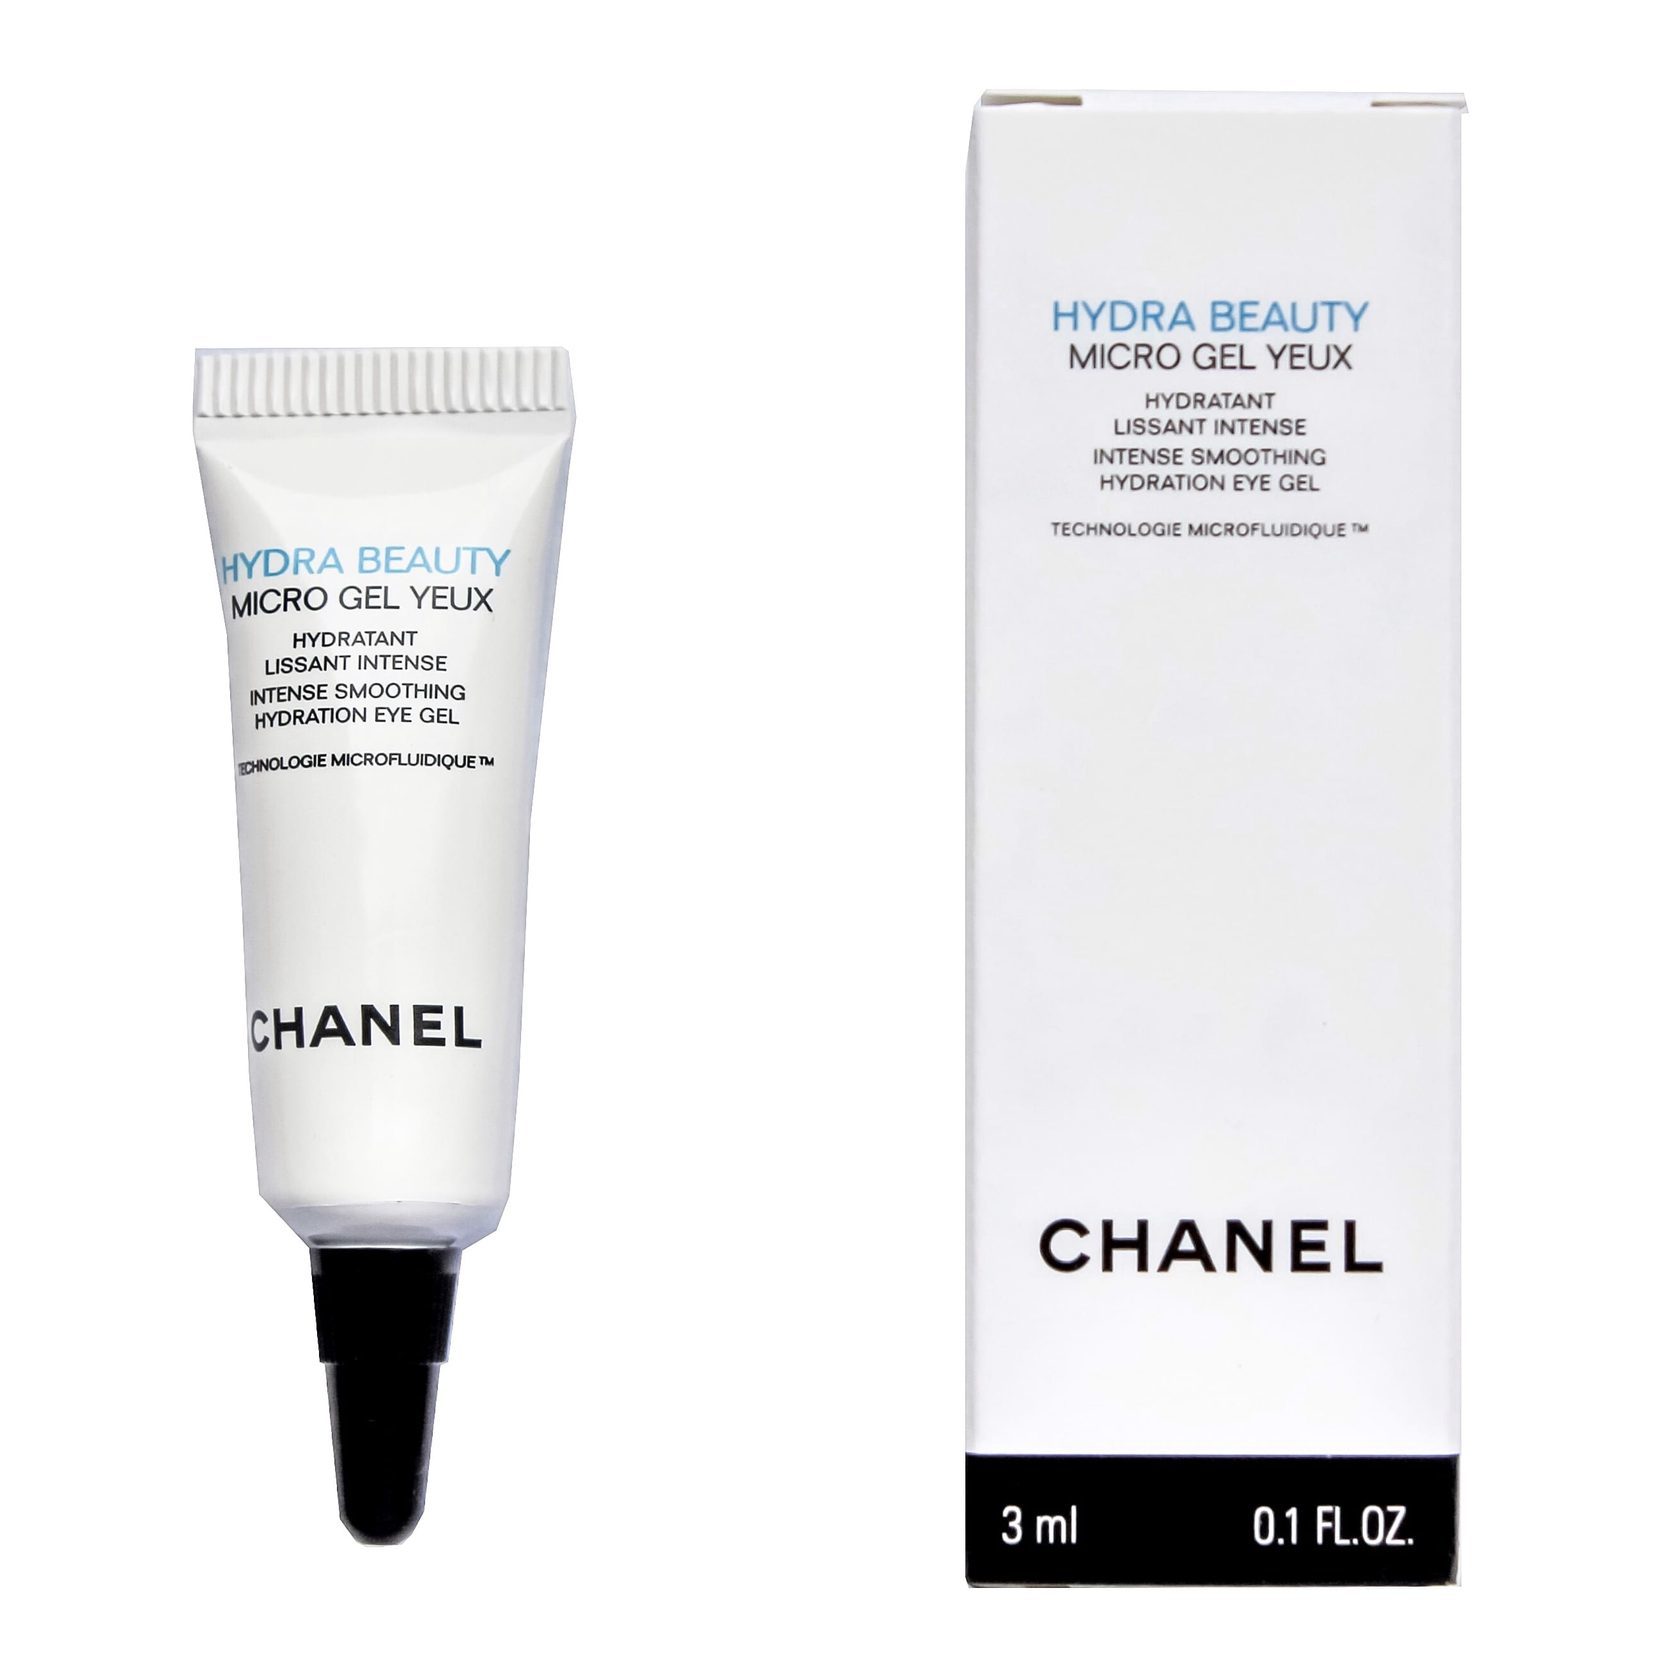 Chanel Hydra Beauty Micro Gel Yeux 0.5fl oz • Price »